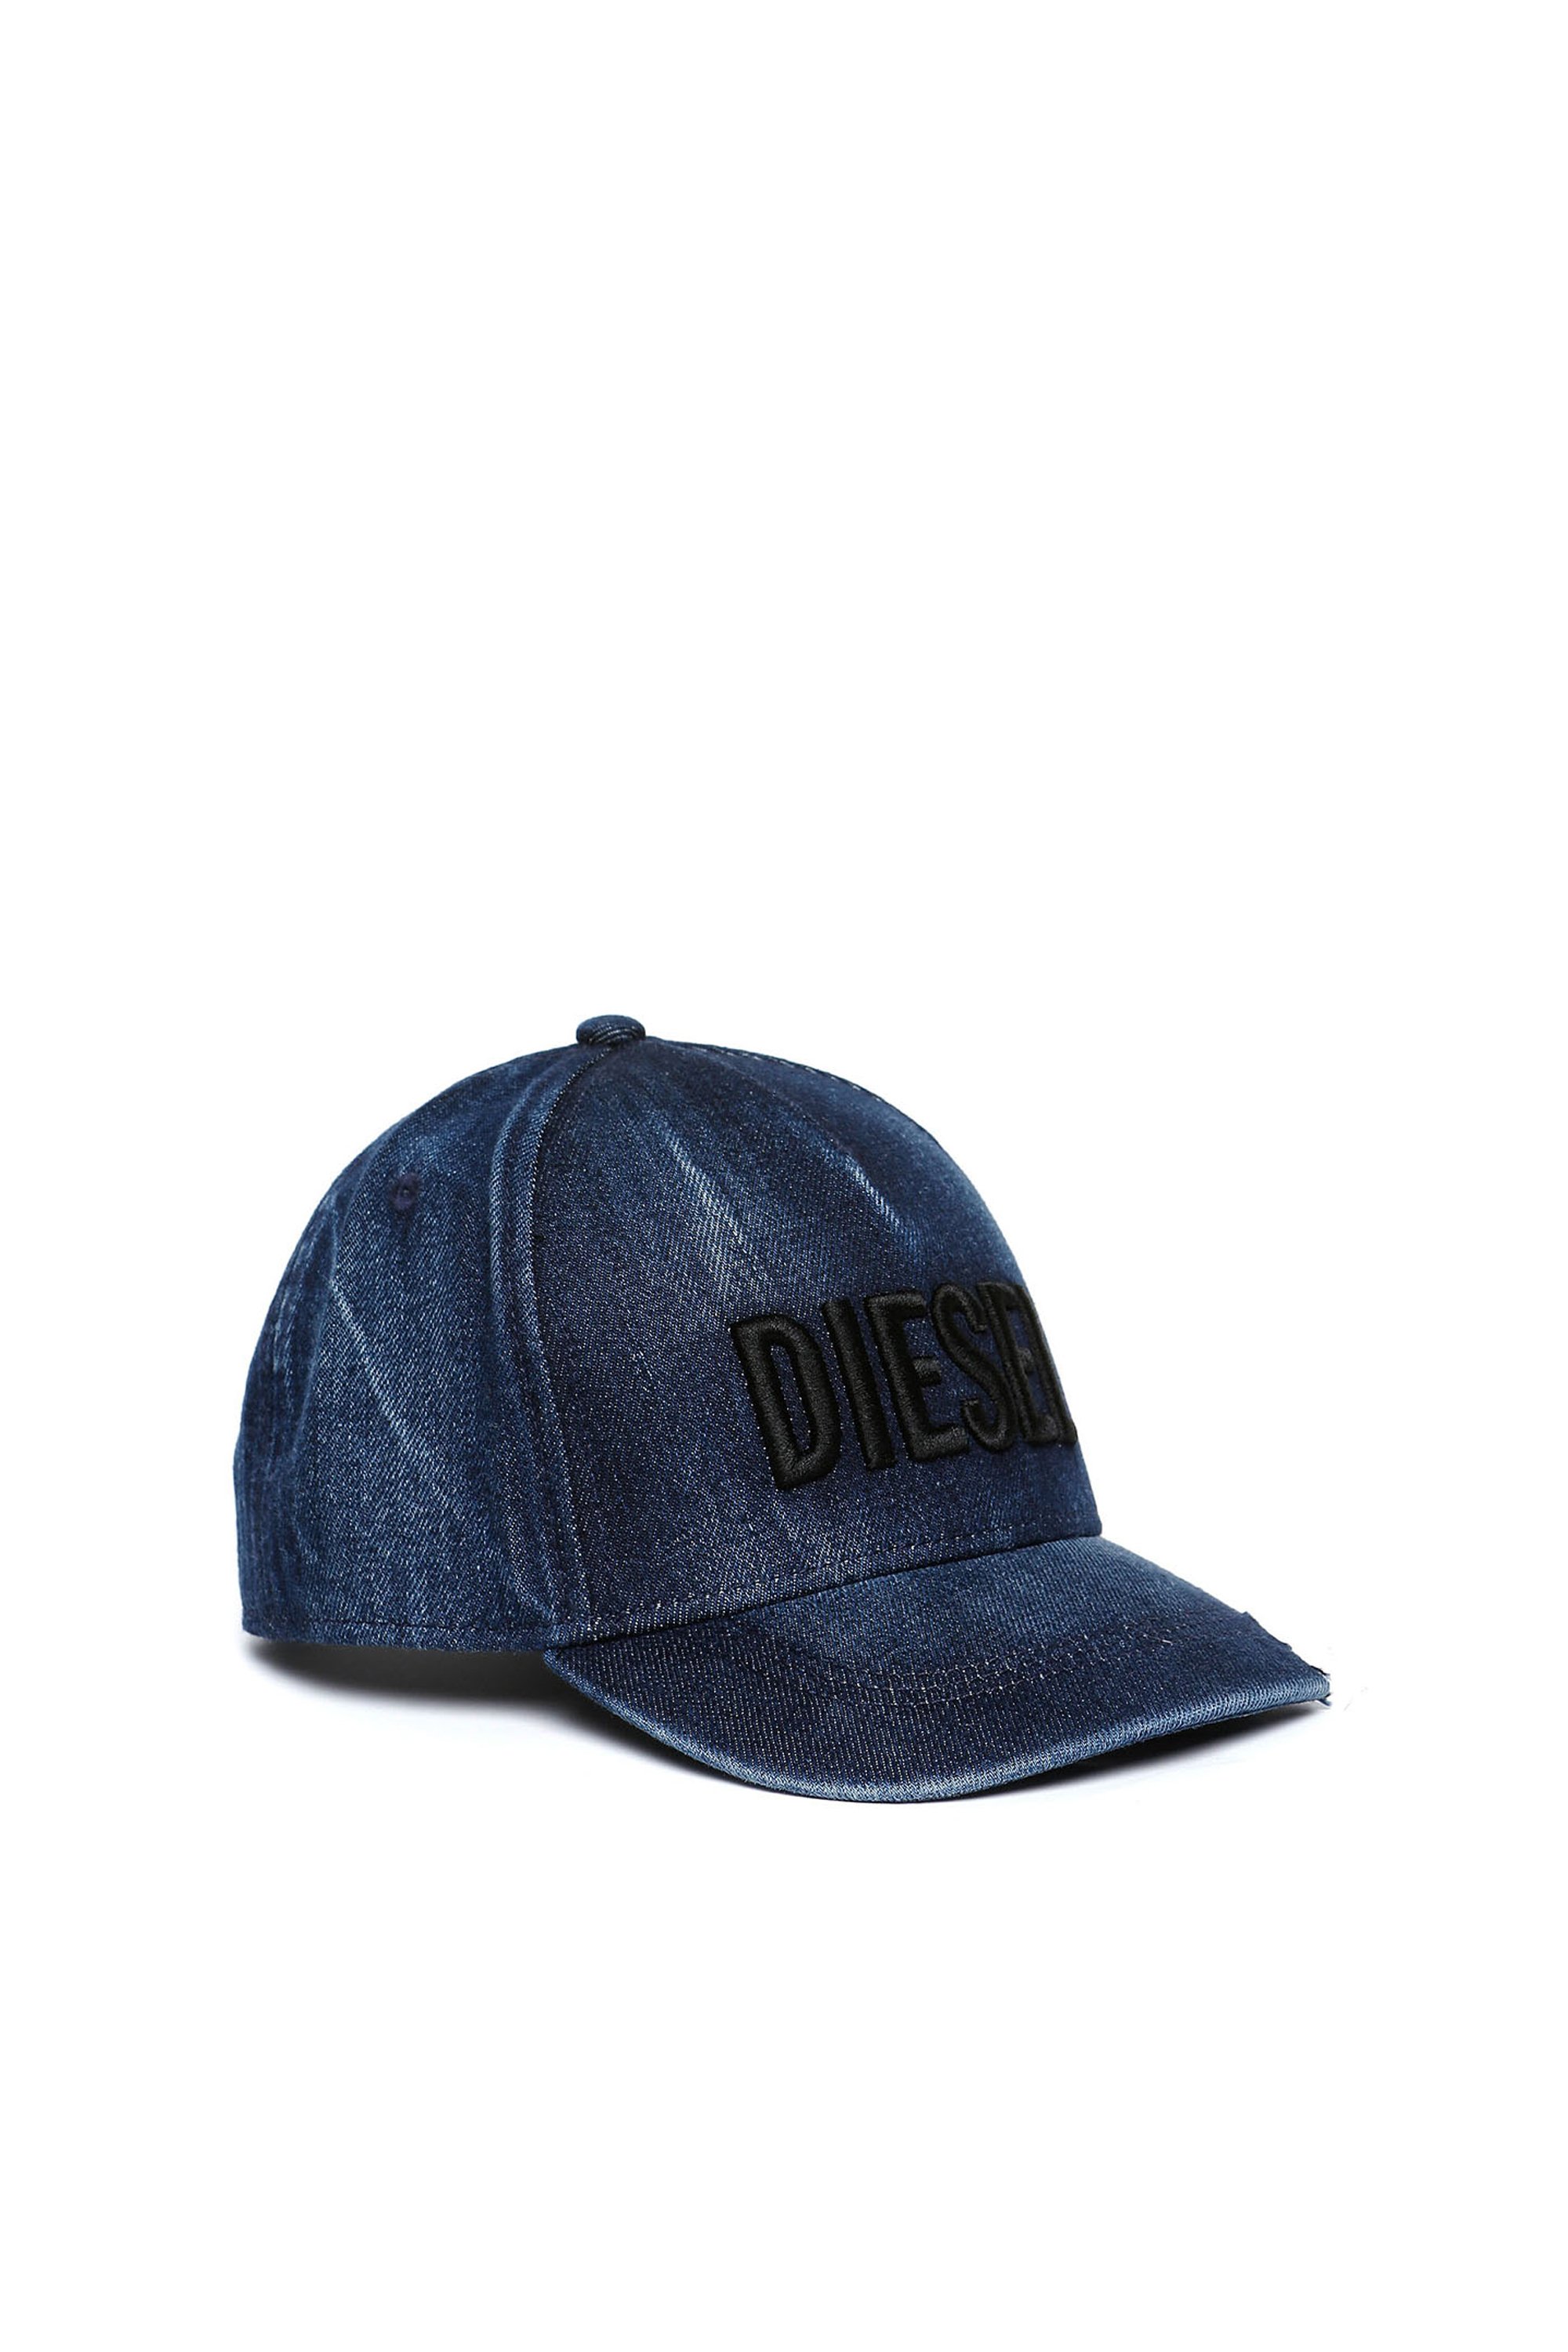 Diesel - FBETY, Blu - Image 1